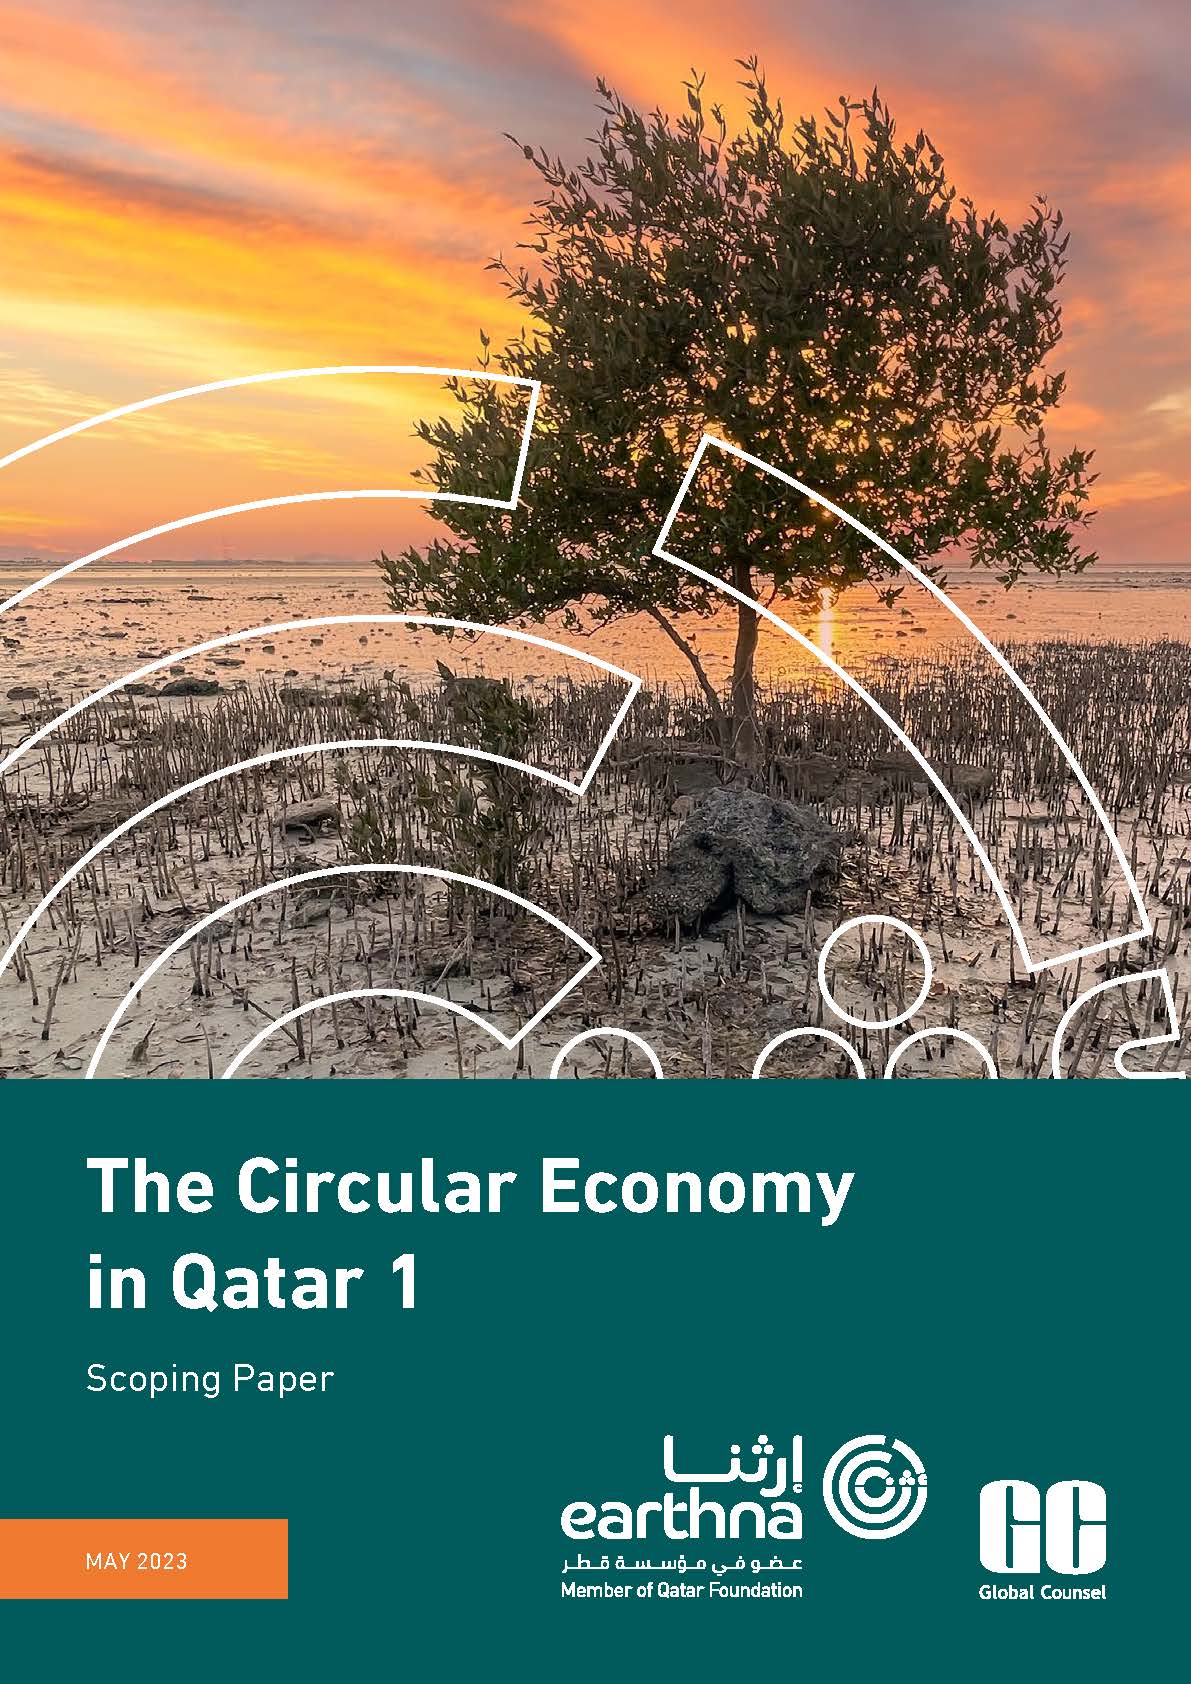 The Circular Economy in Qatar 1 - Scoping Paper